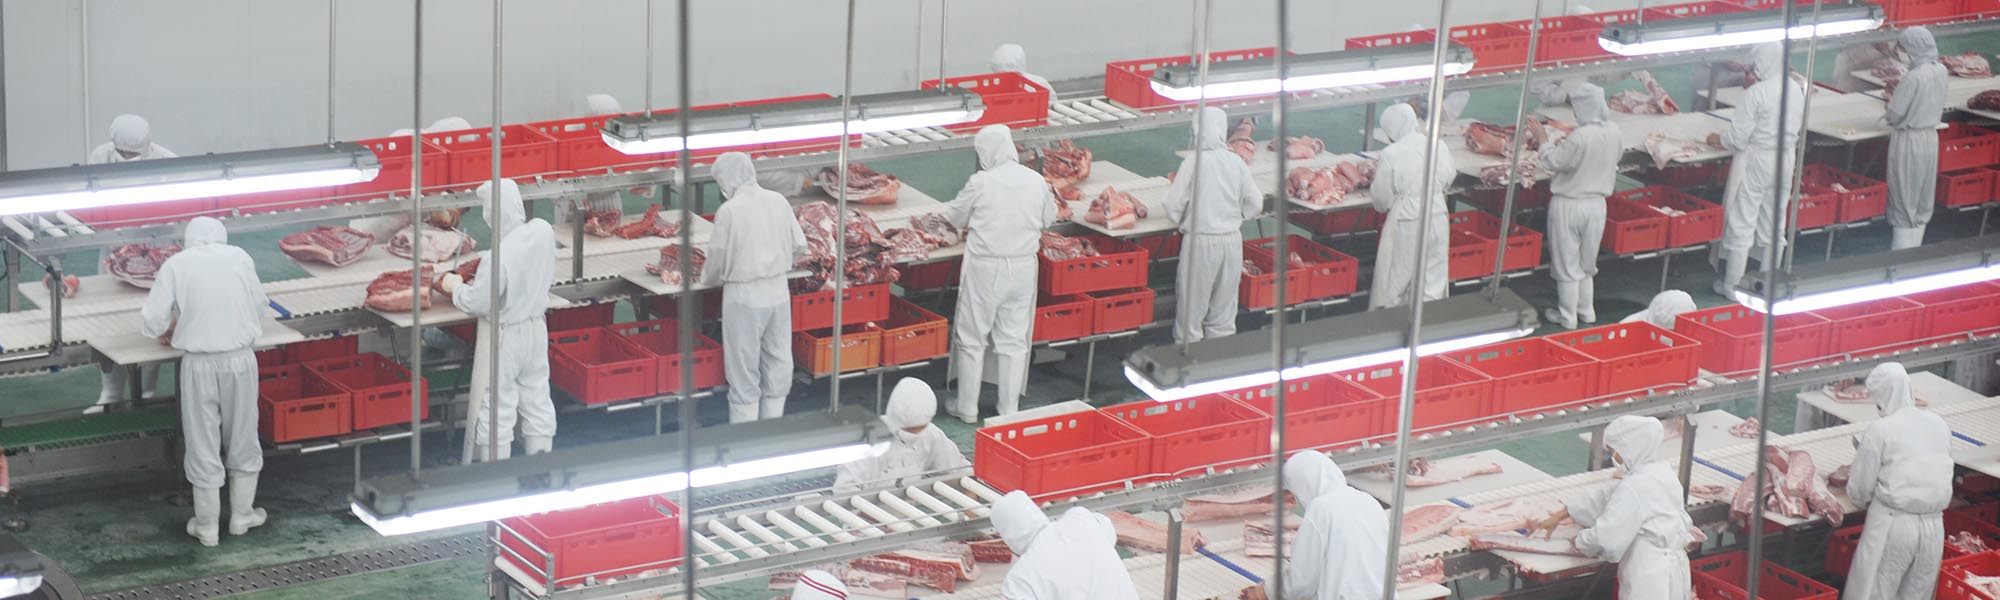 pork processing assembly line